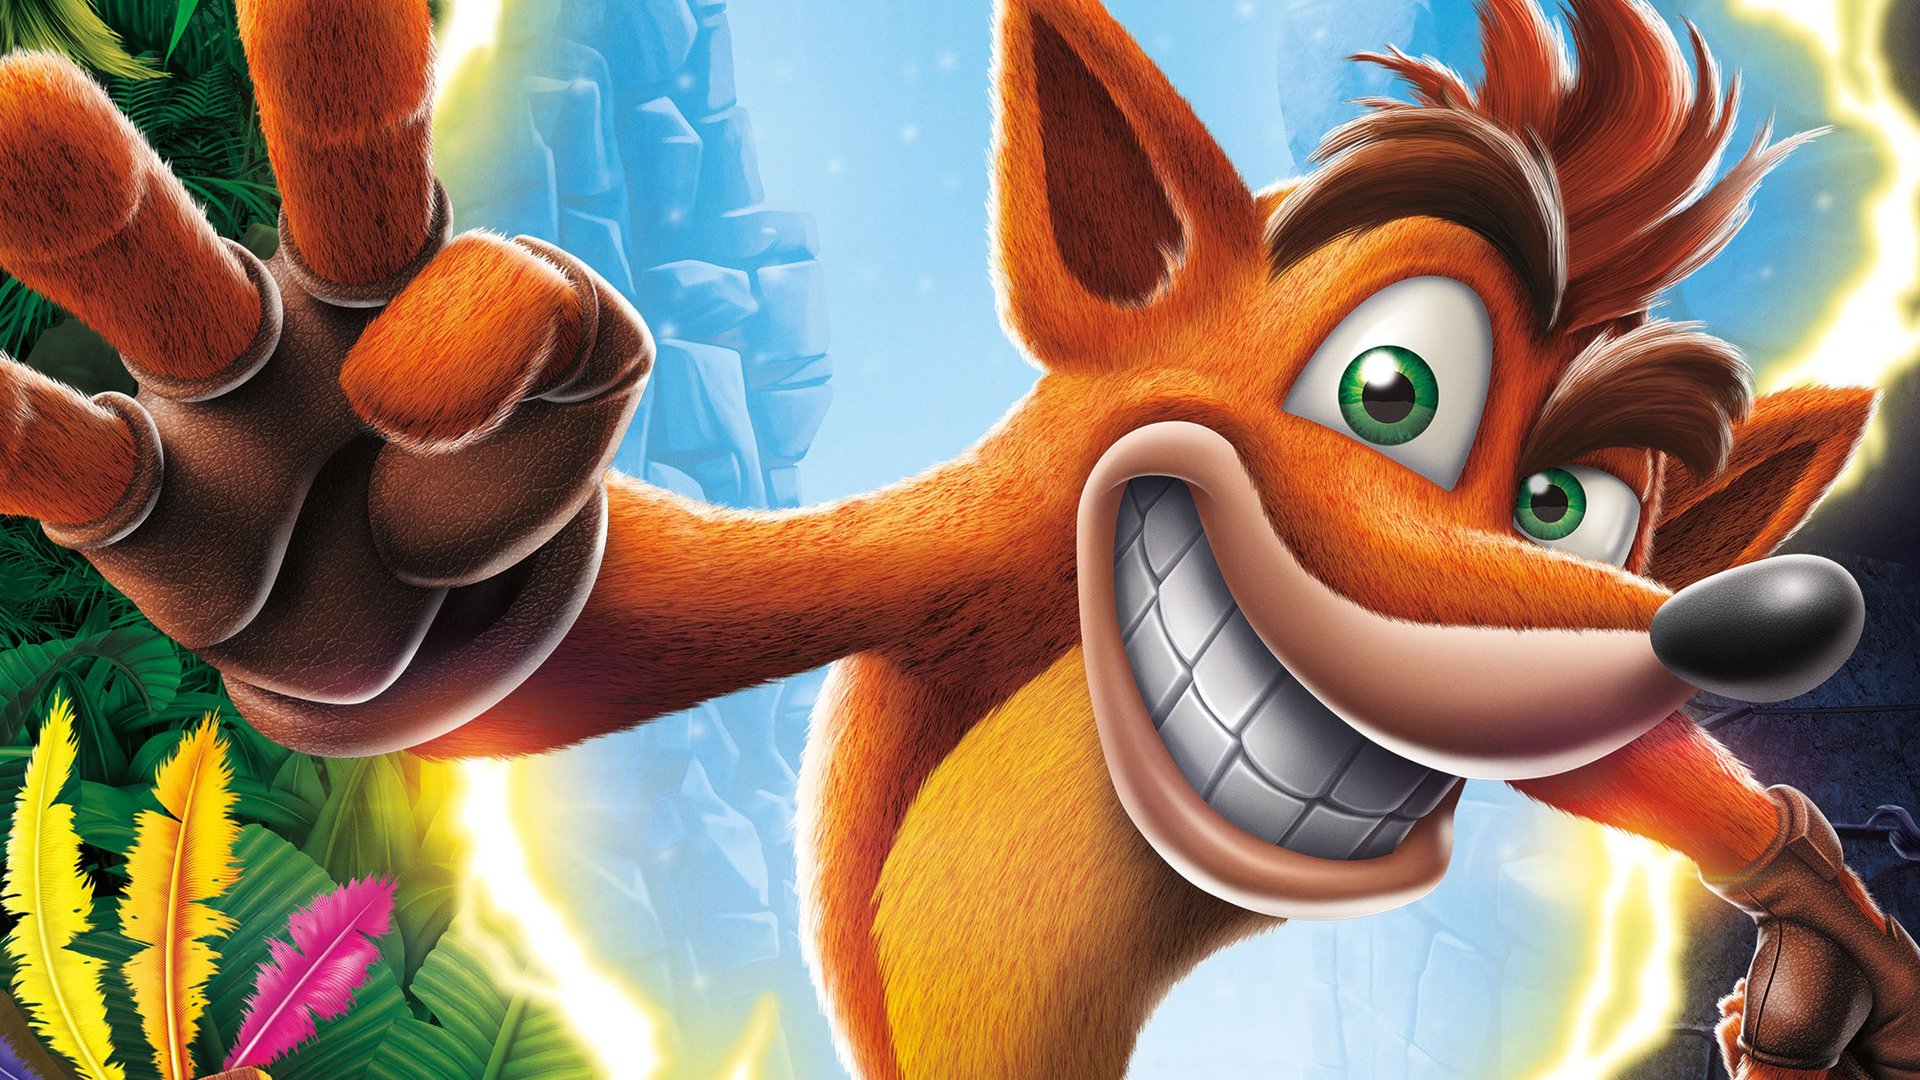 Prace nad Crash Bandicoot 5 mogły zostać anulowane - plotki